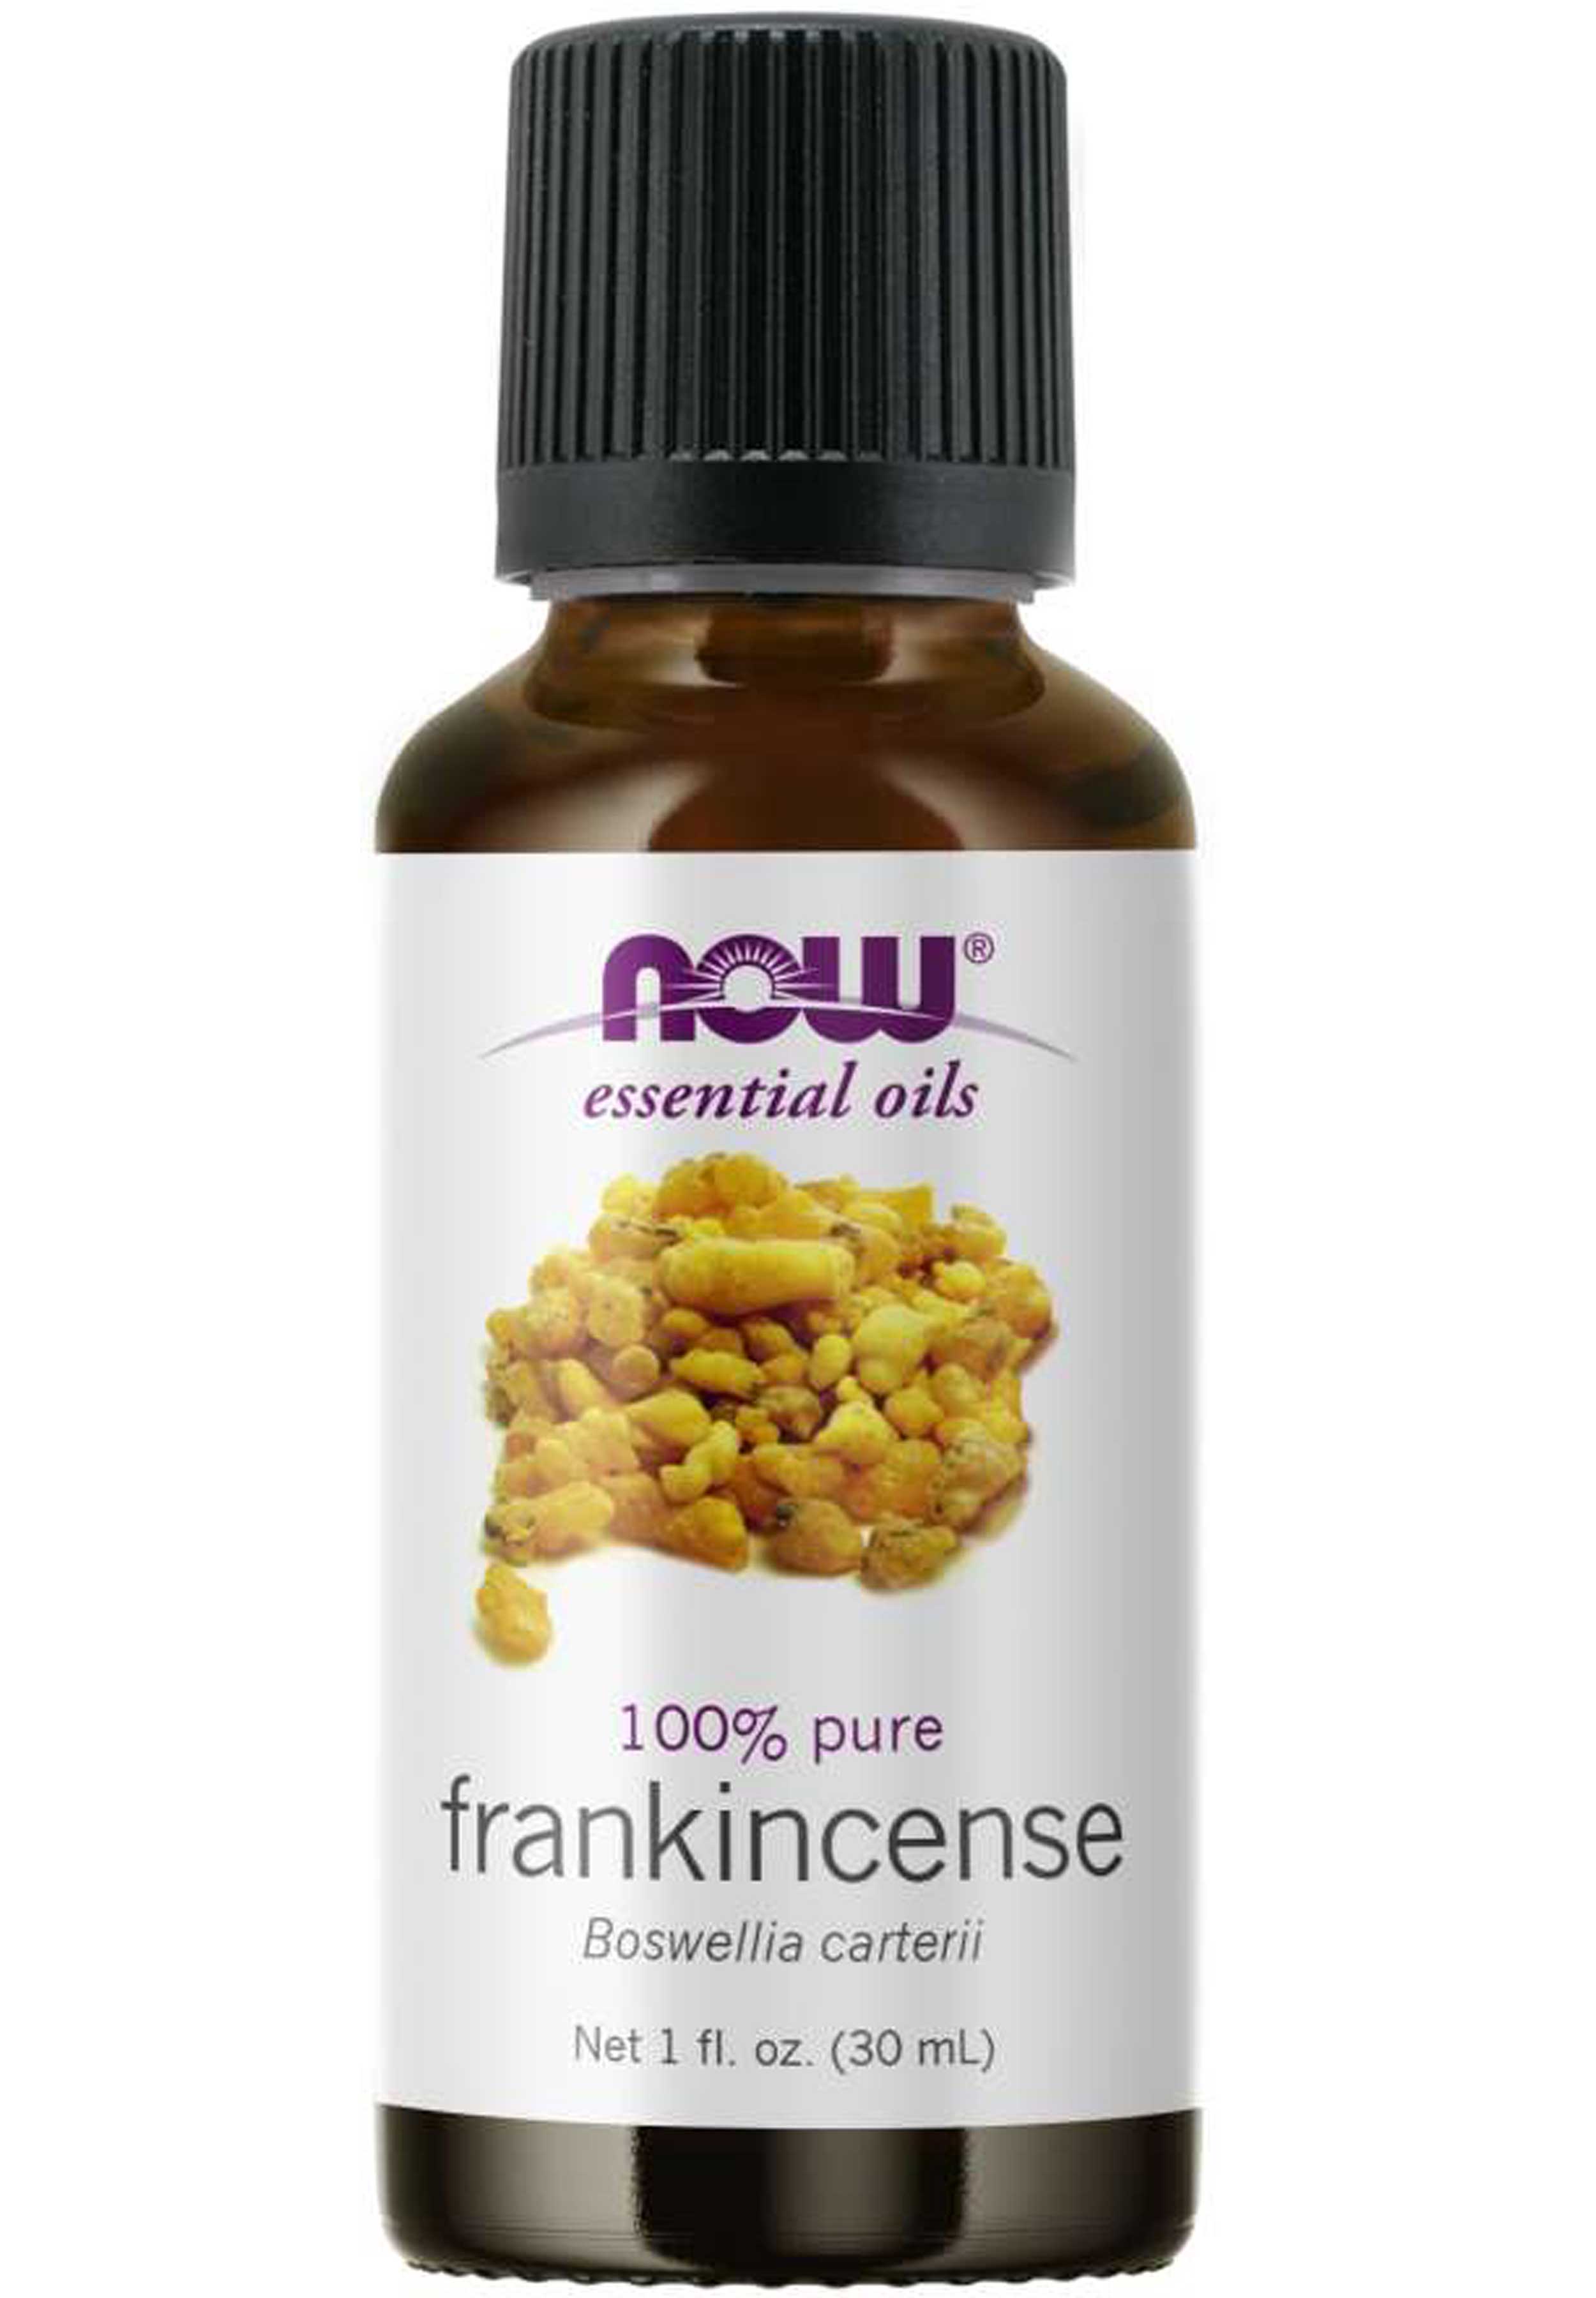 NOW Essential Oils Frankincense Oil